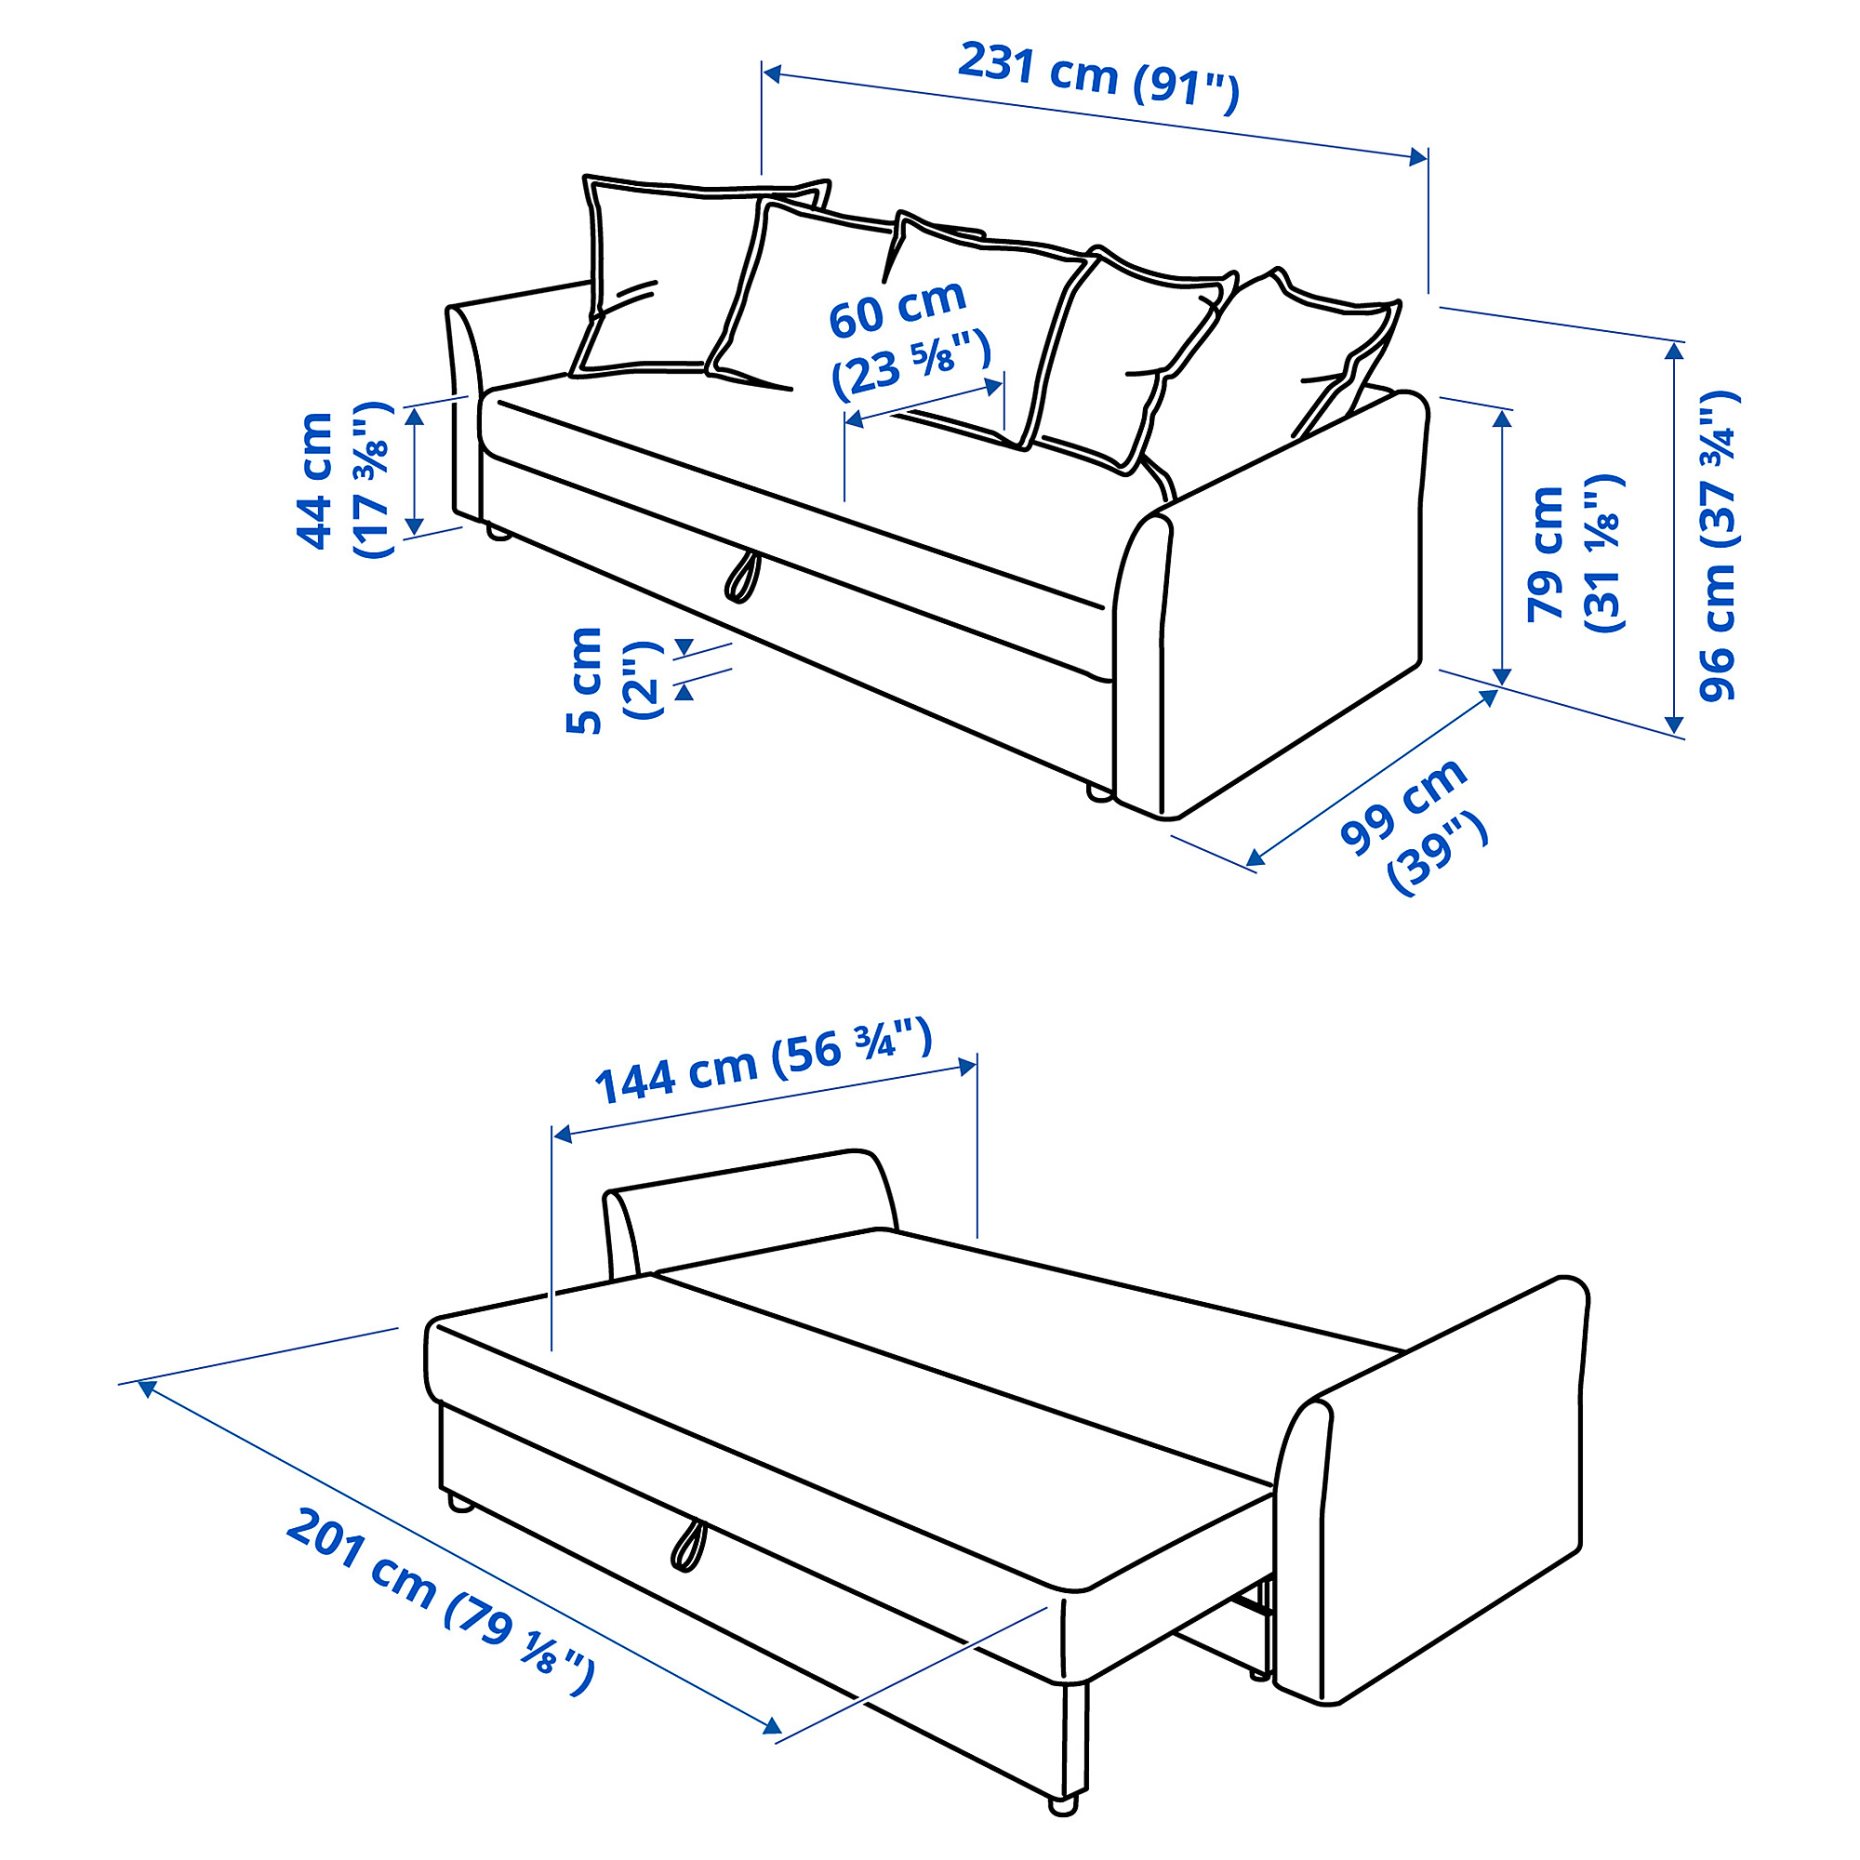 HOLMSUND, τριθέσιος καναπές-κρεβάτι, 195.169.18